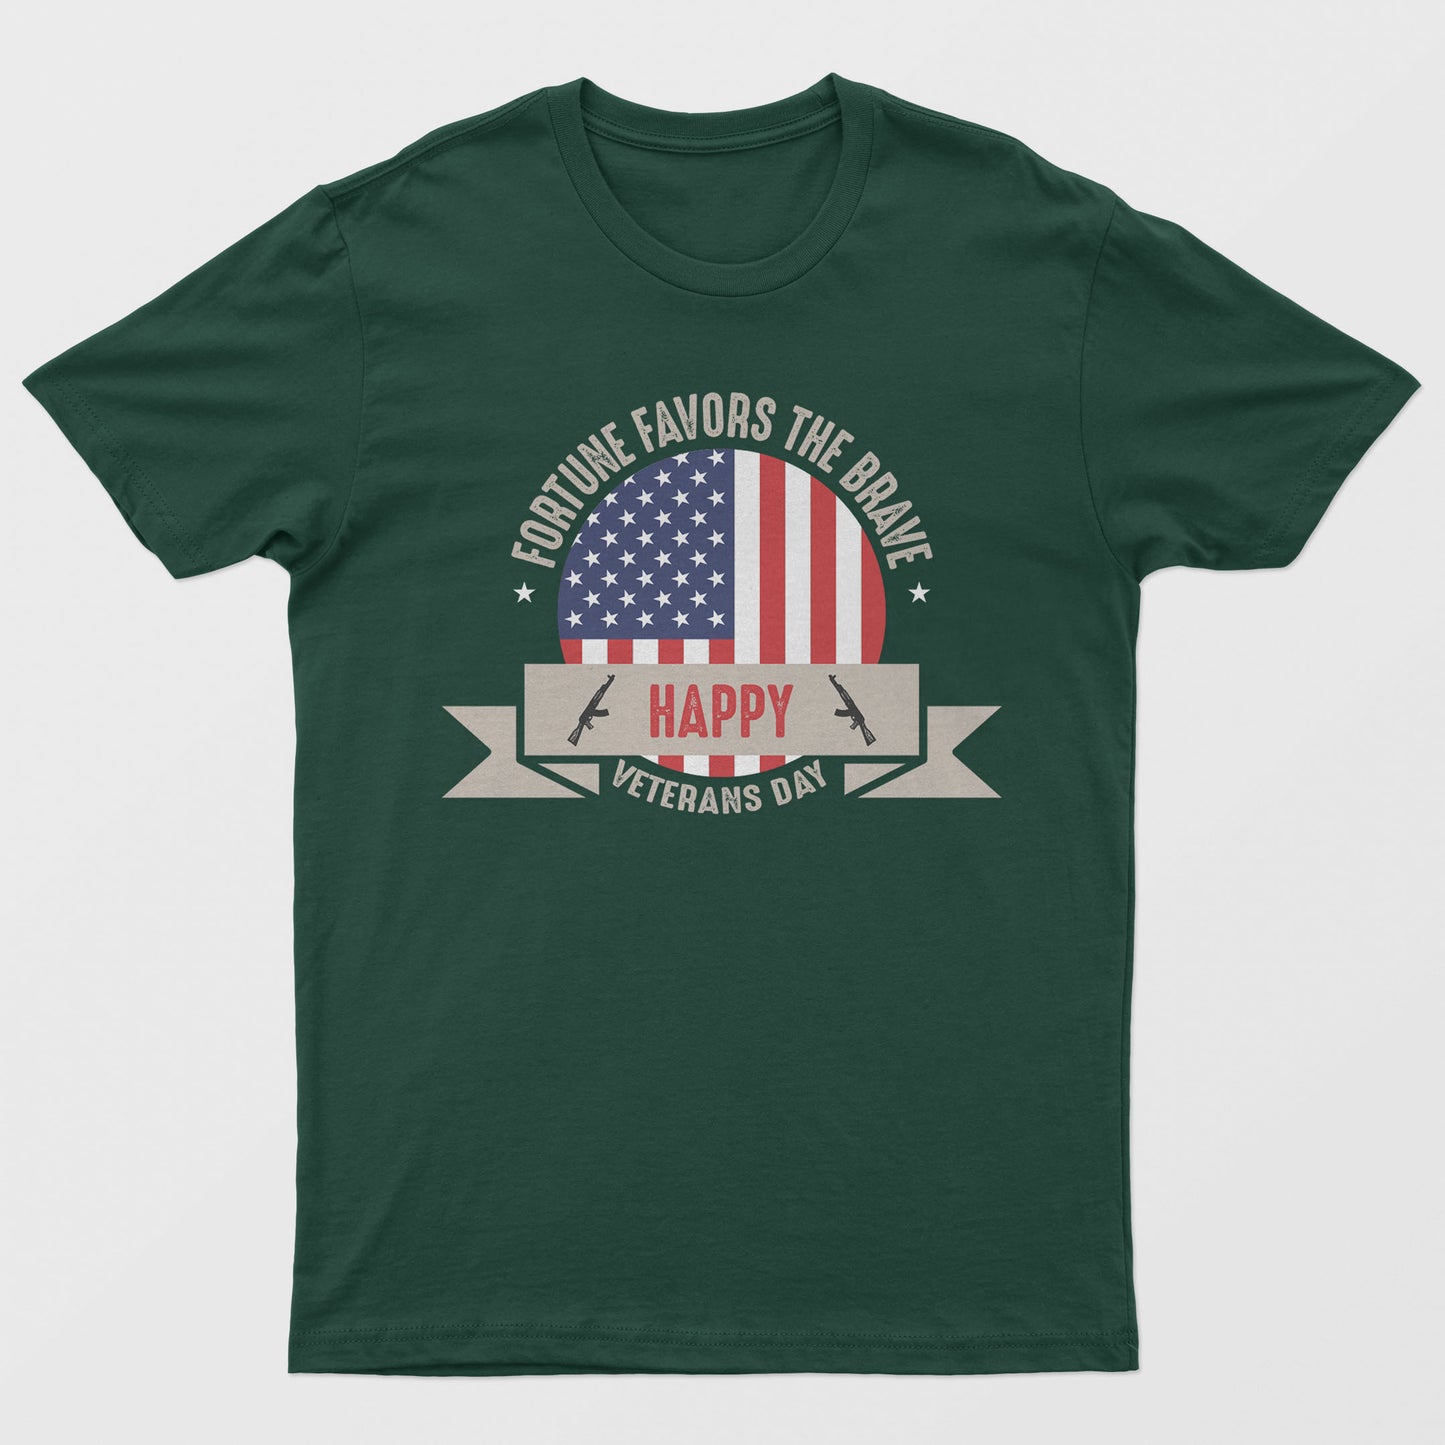 Veterans Day Graphic Print Unisex T-Shirt - S-XXXL, Various Colors, Free Ship